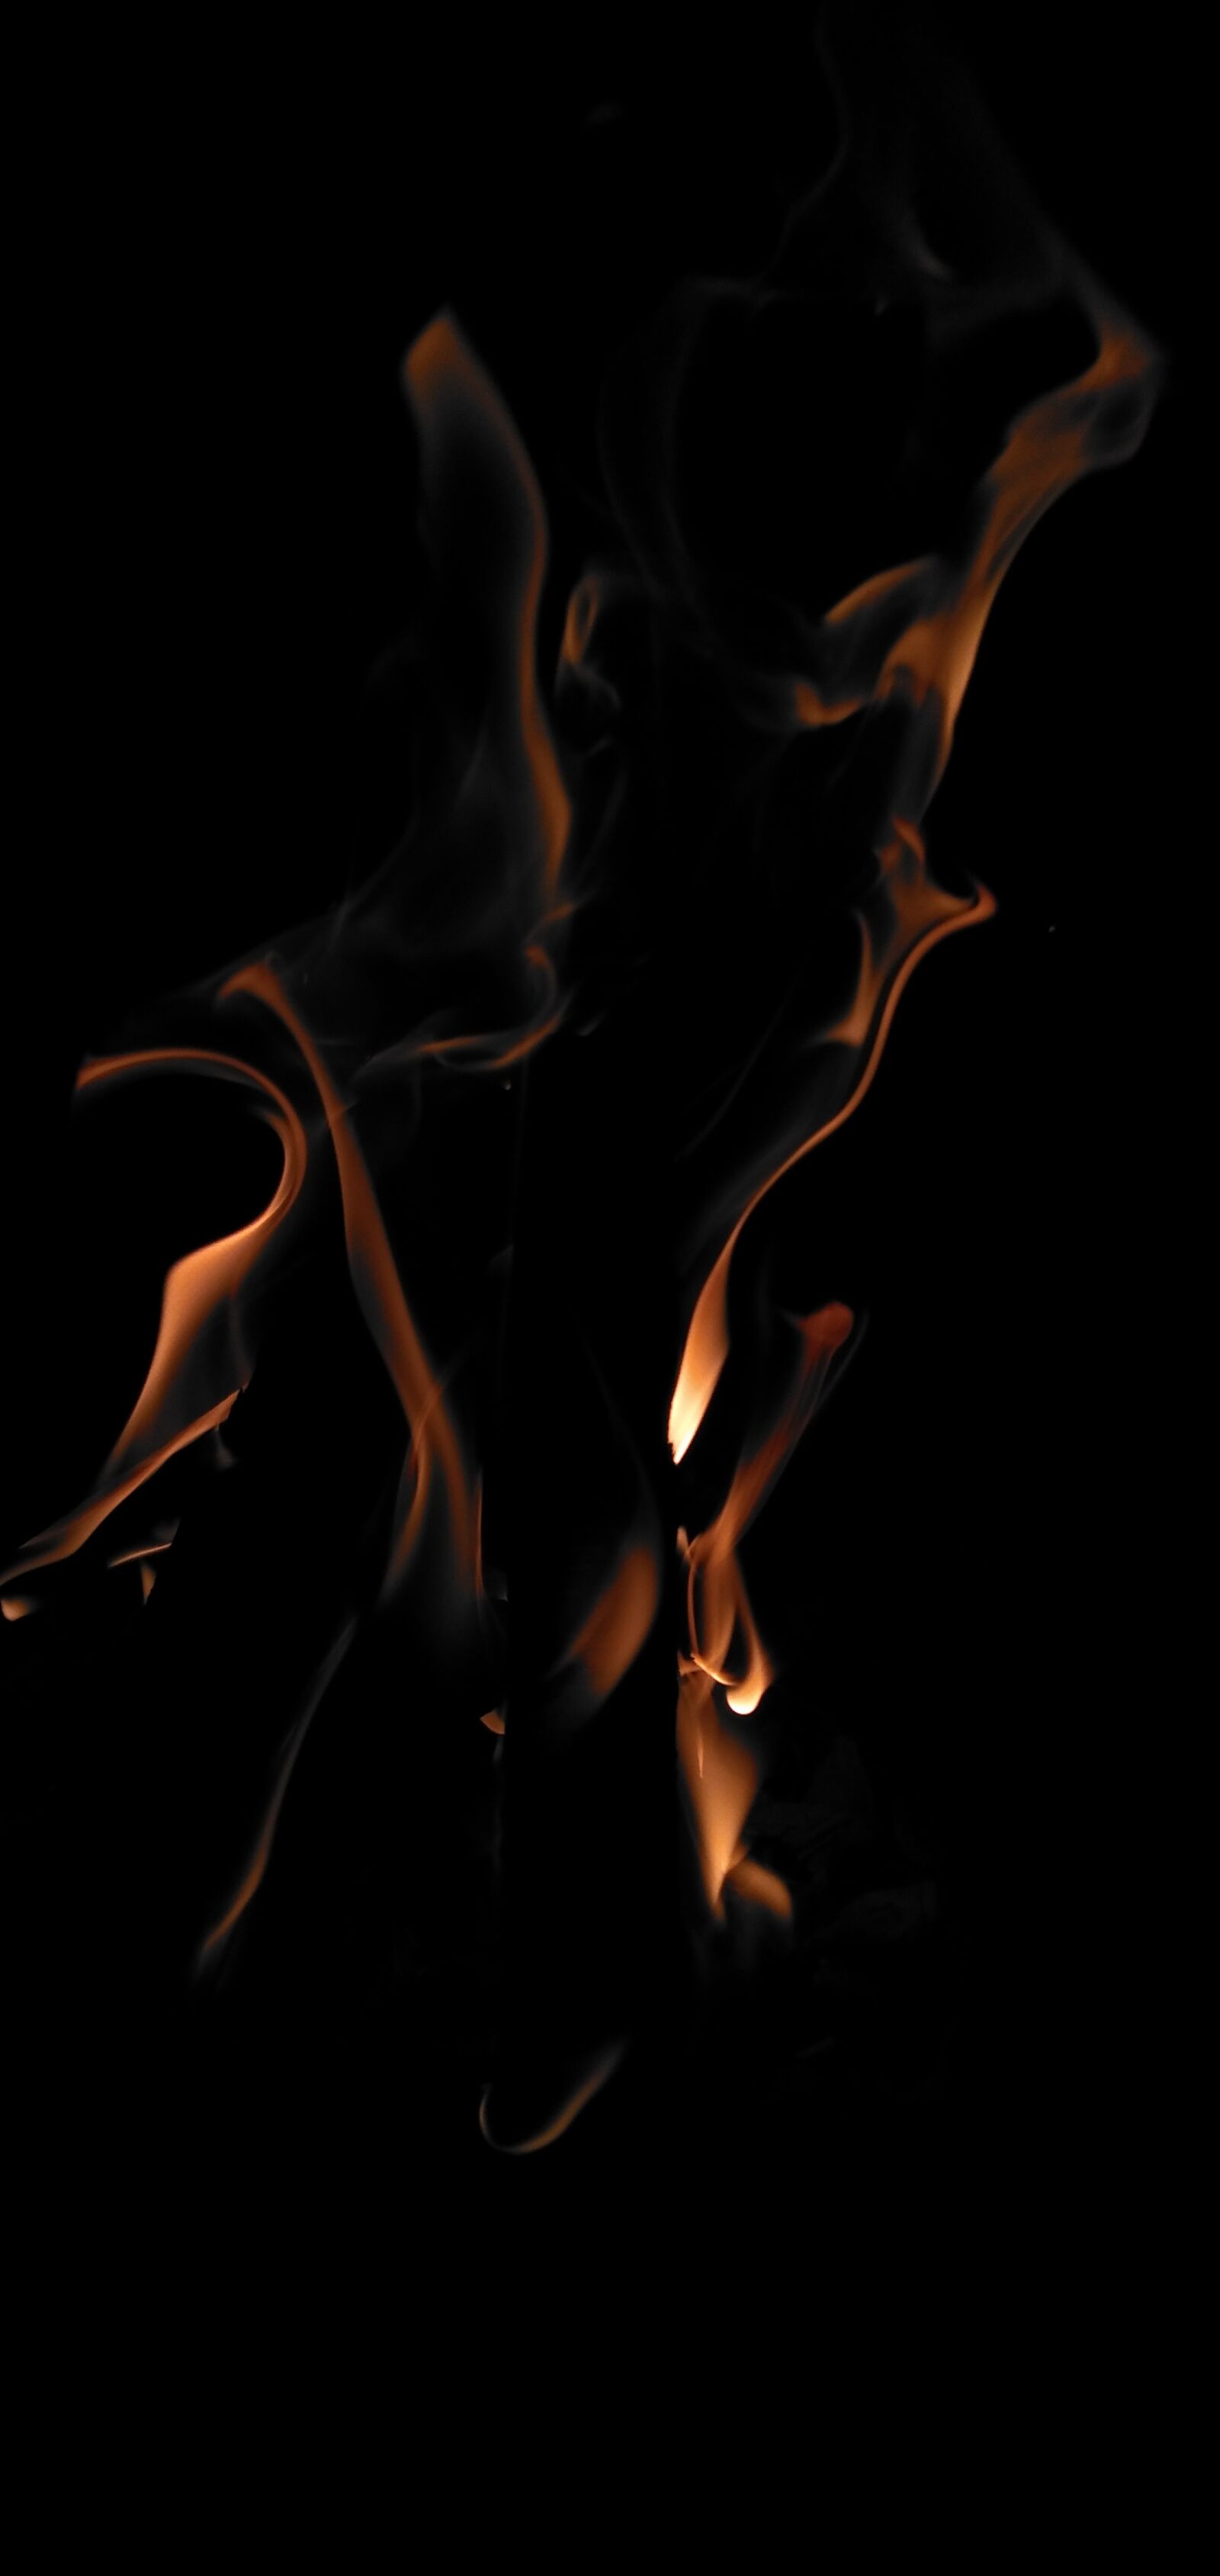 vivo V9 sample photo. Fire, flame, heat photography